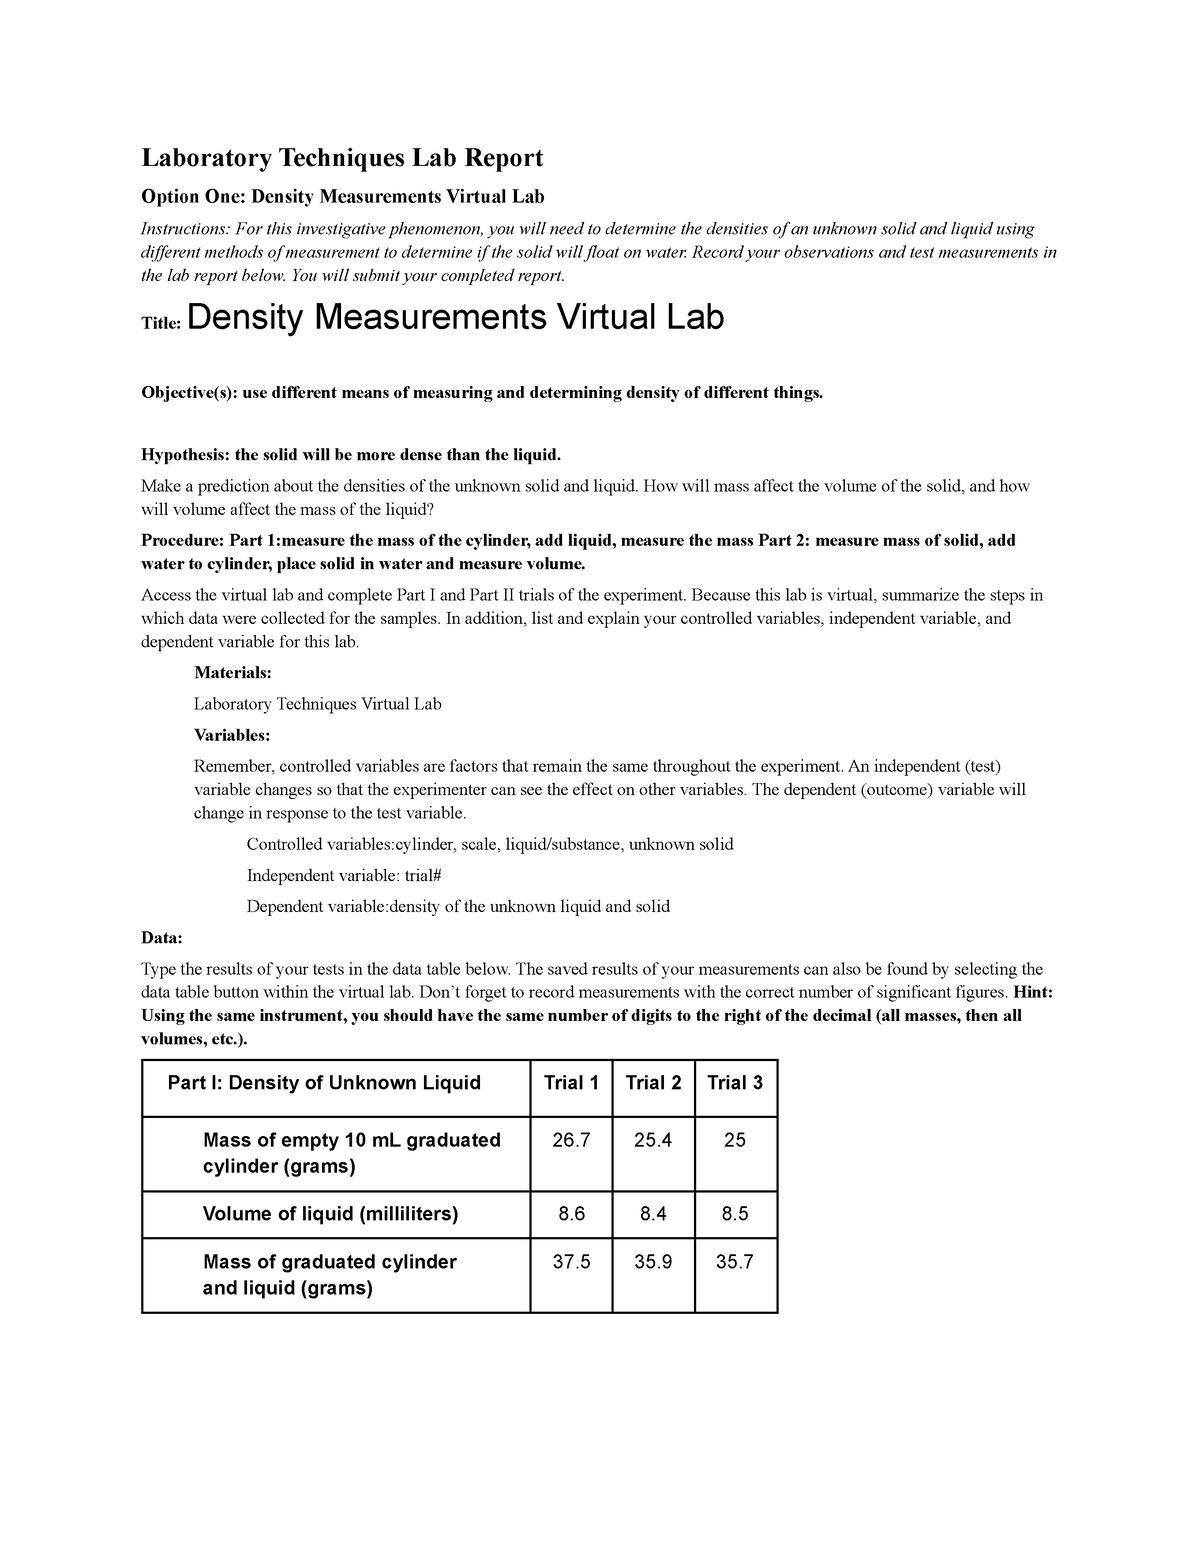 0107 Laboratory Techniques Laboratory Techniques Lab Report Option One Density Measurements 8795